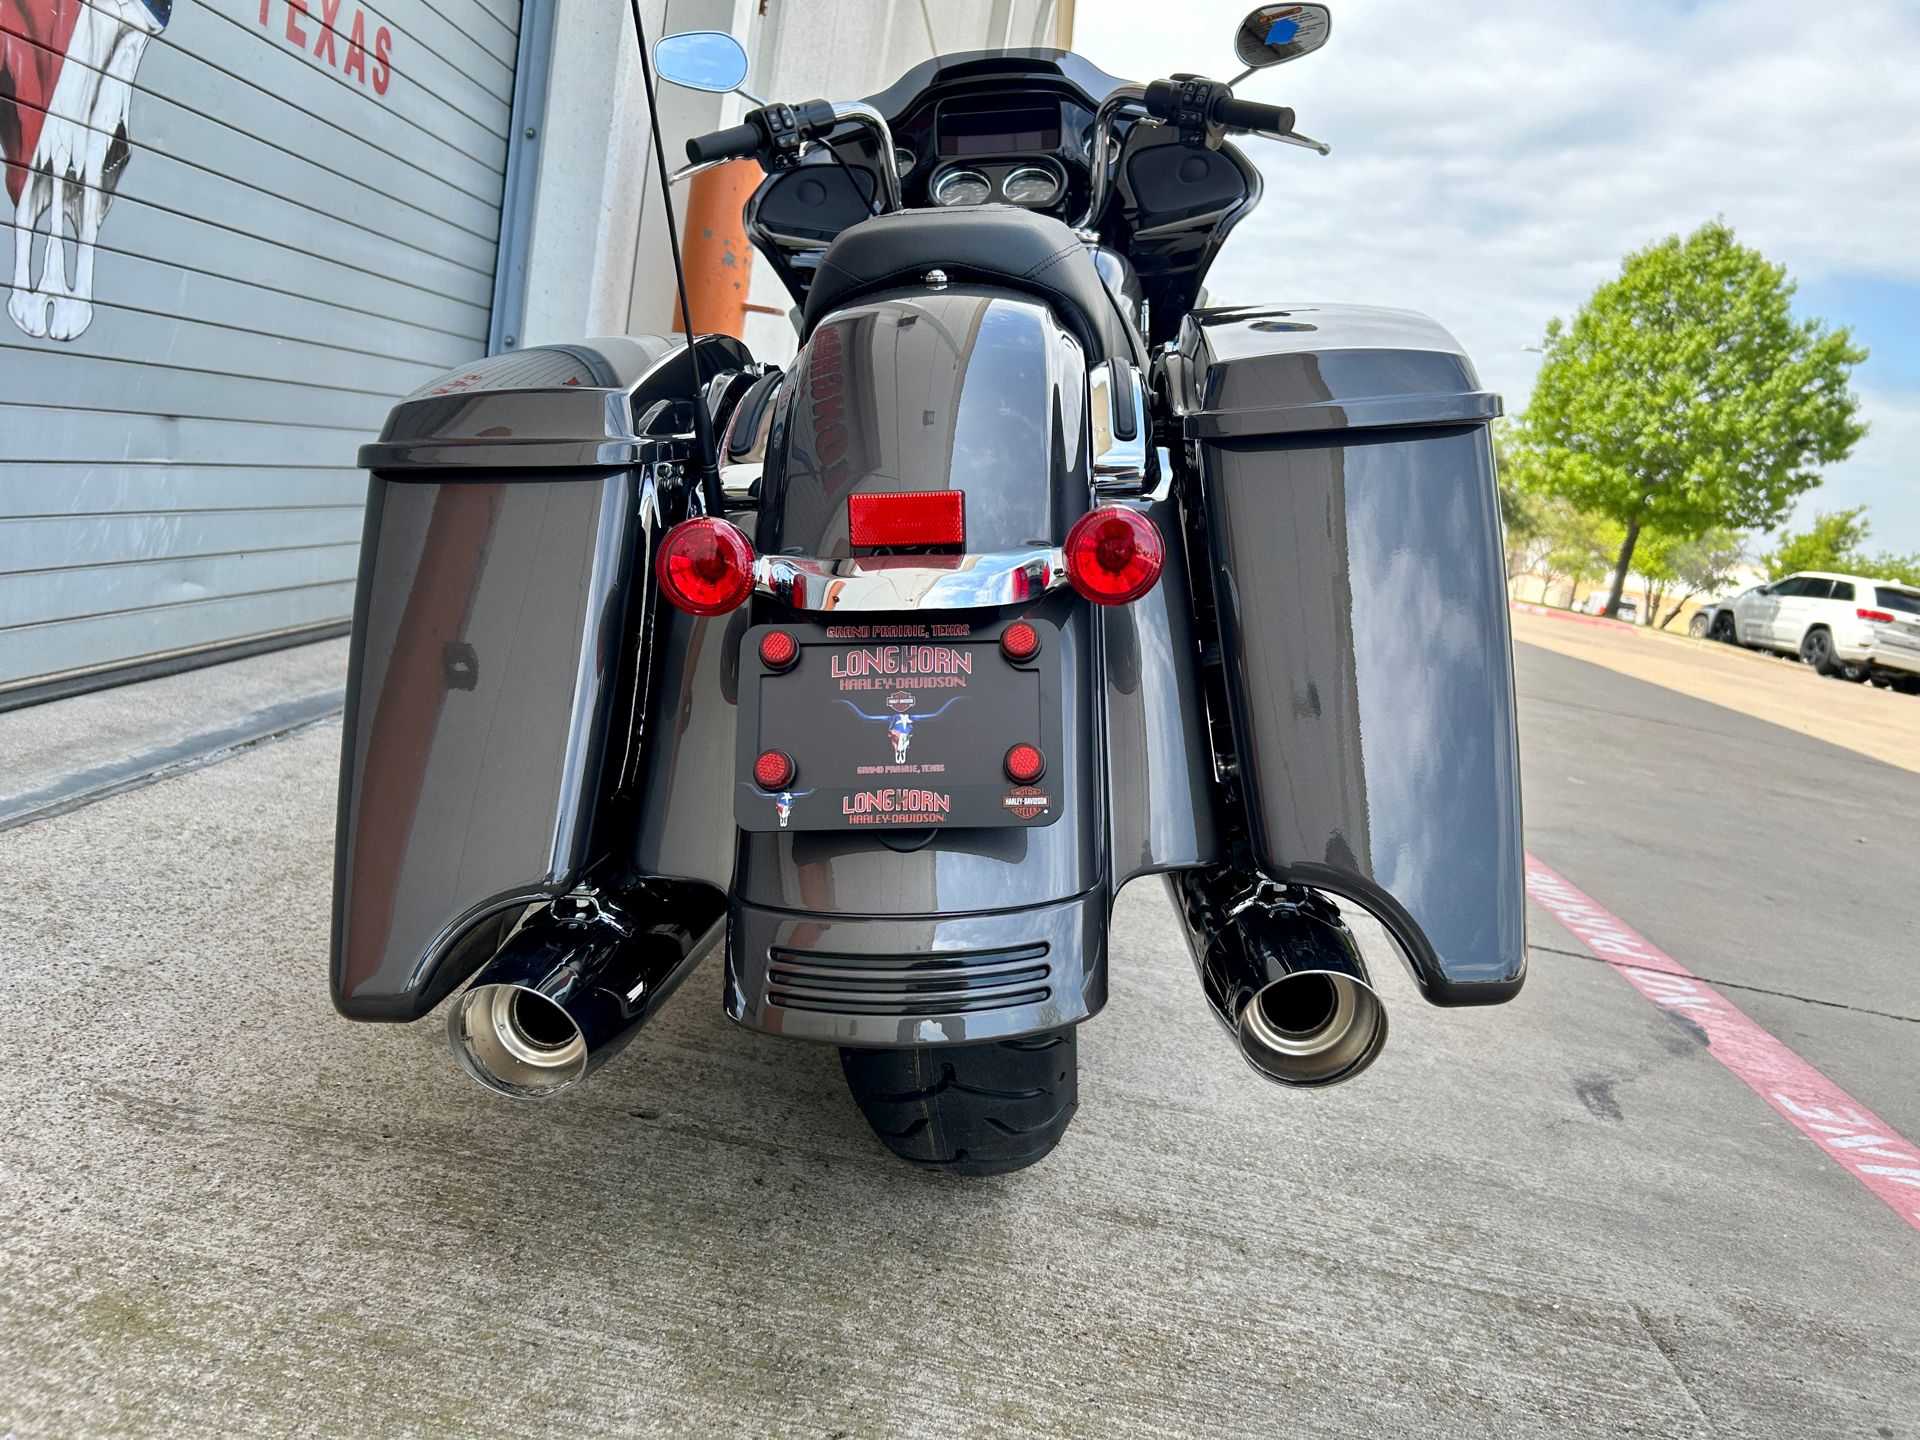 2023 Harley-Davidson Road Glide® Special in Grand Prairie, Texas - Photo 6